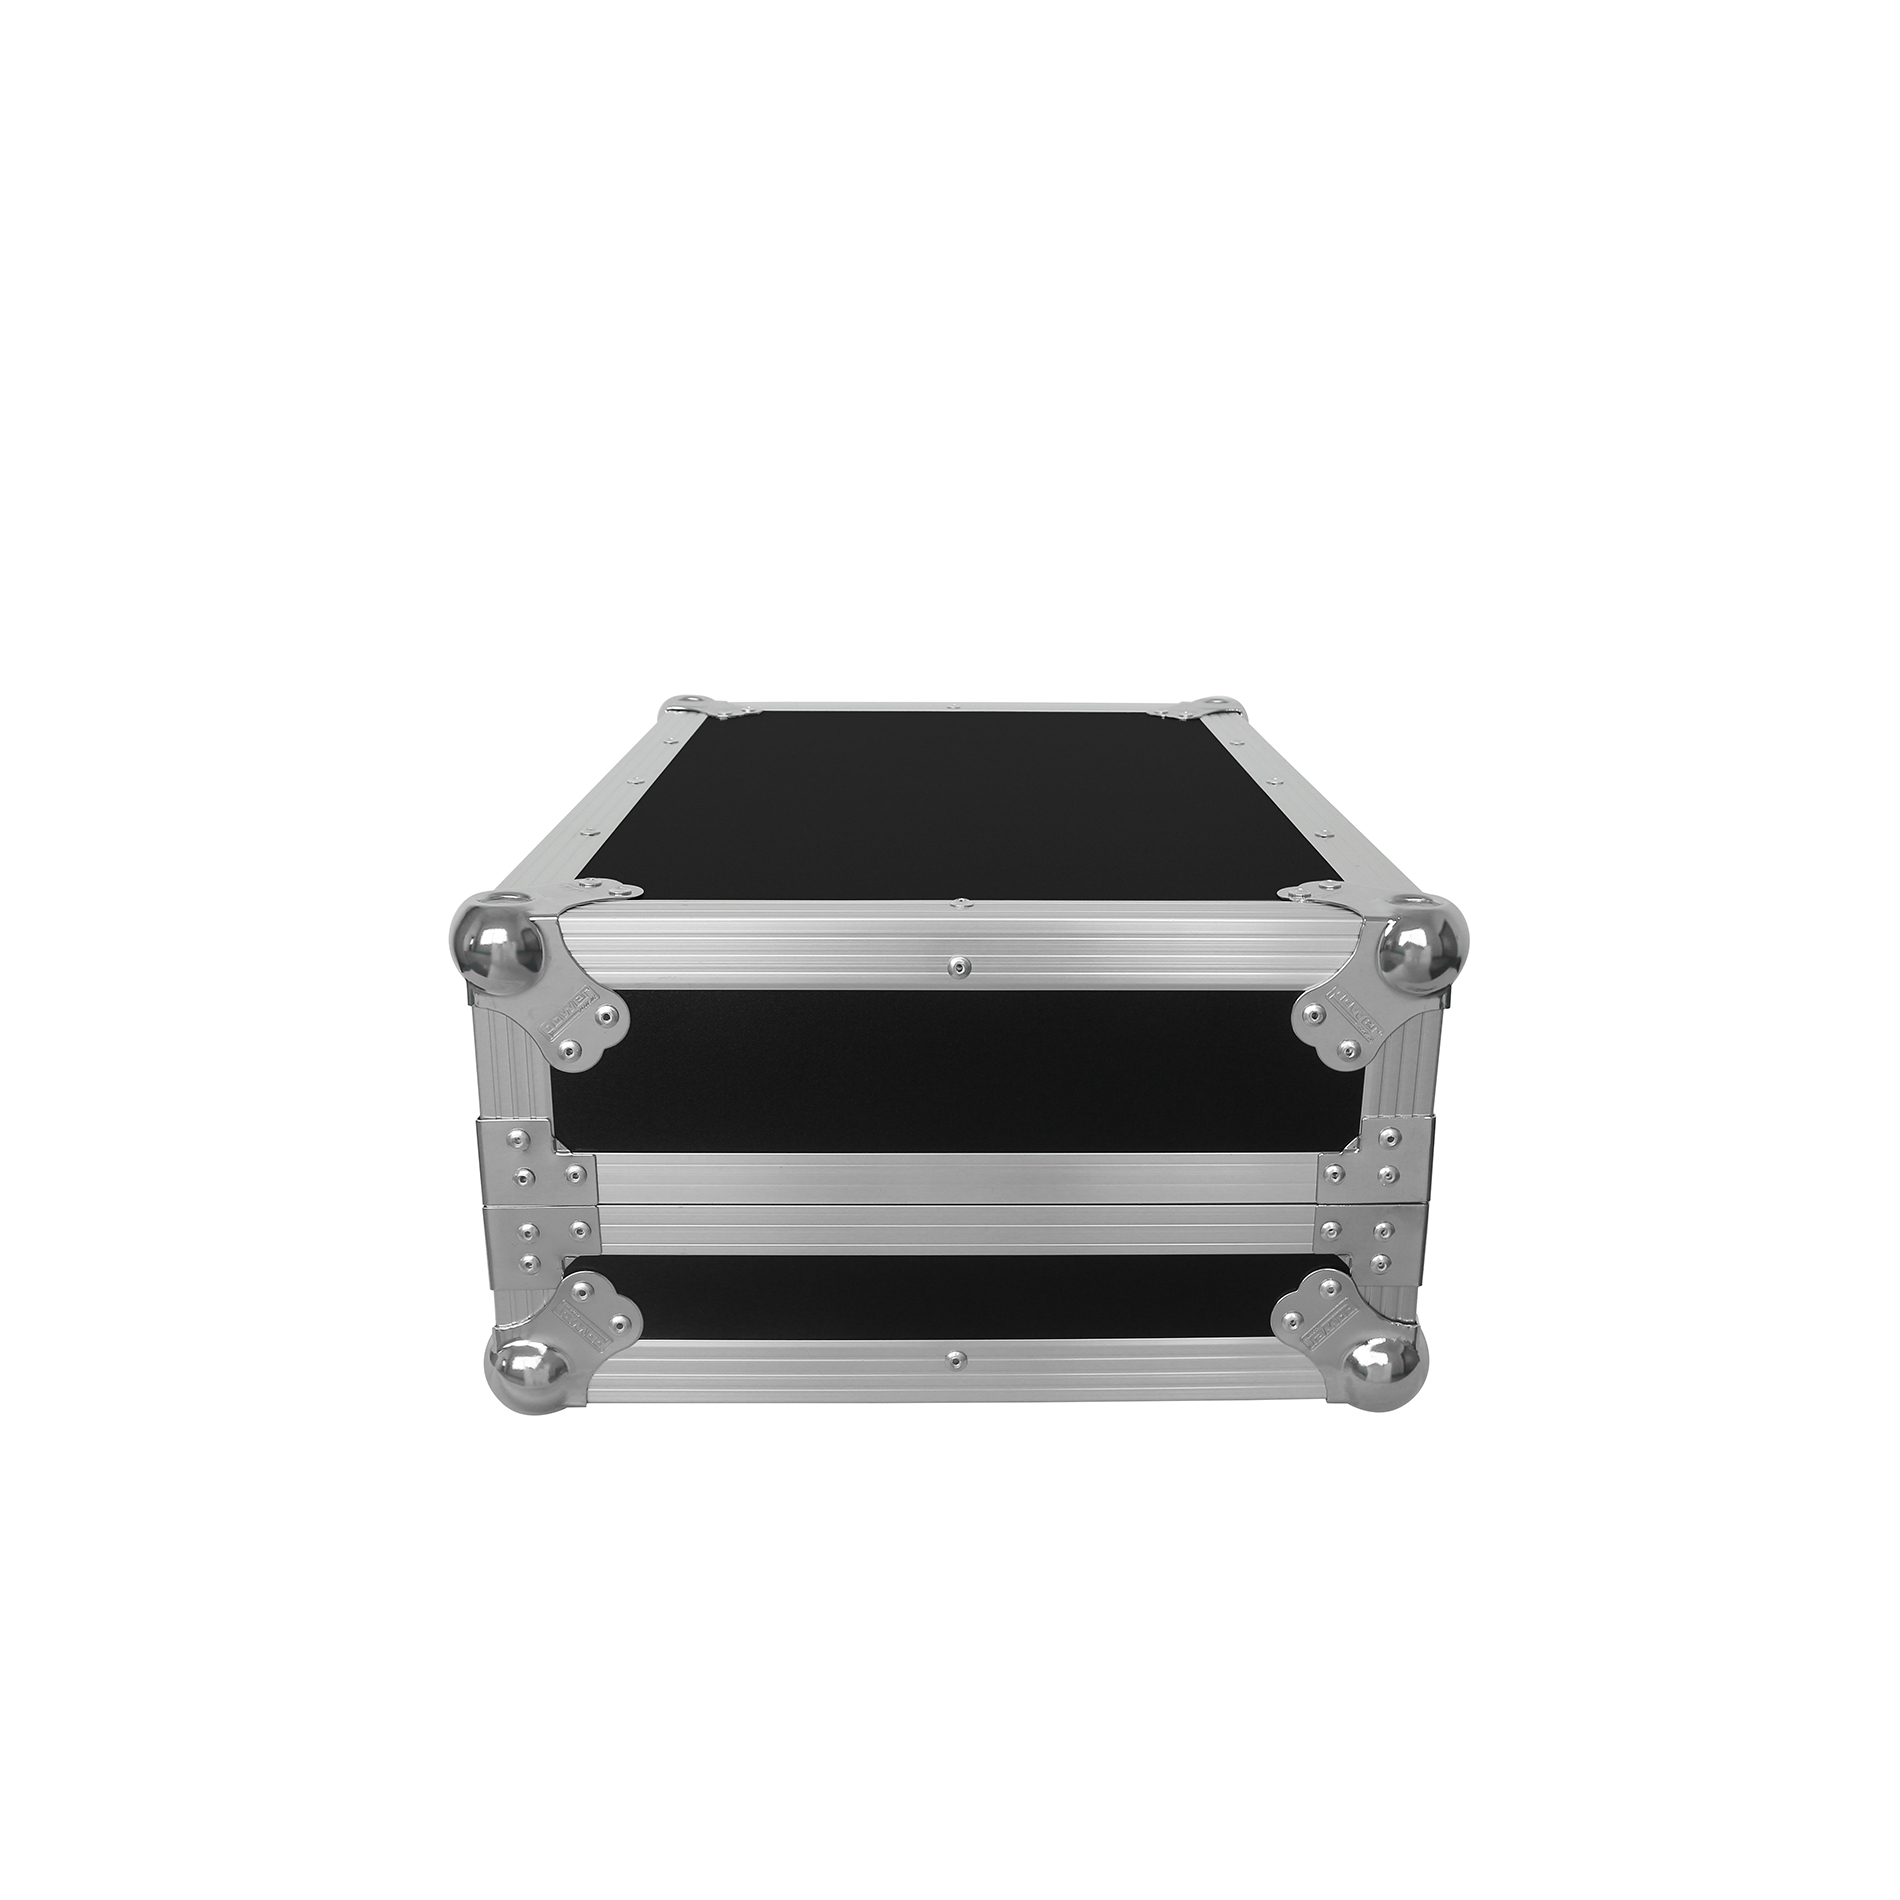 Power Acoustics Fcm Dm3s - Cases for mixing desk - Variation 2